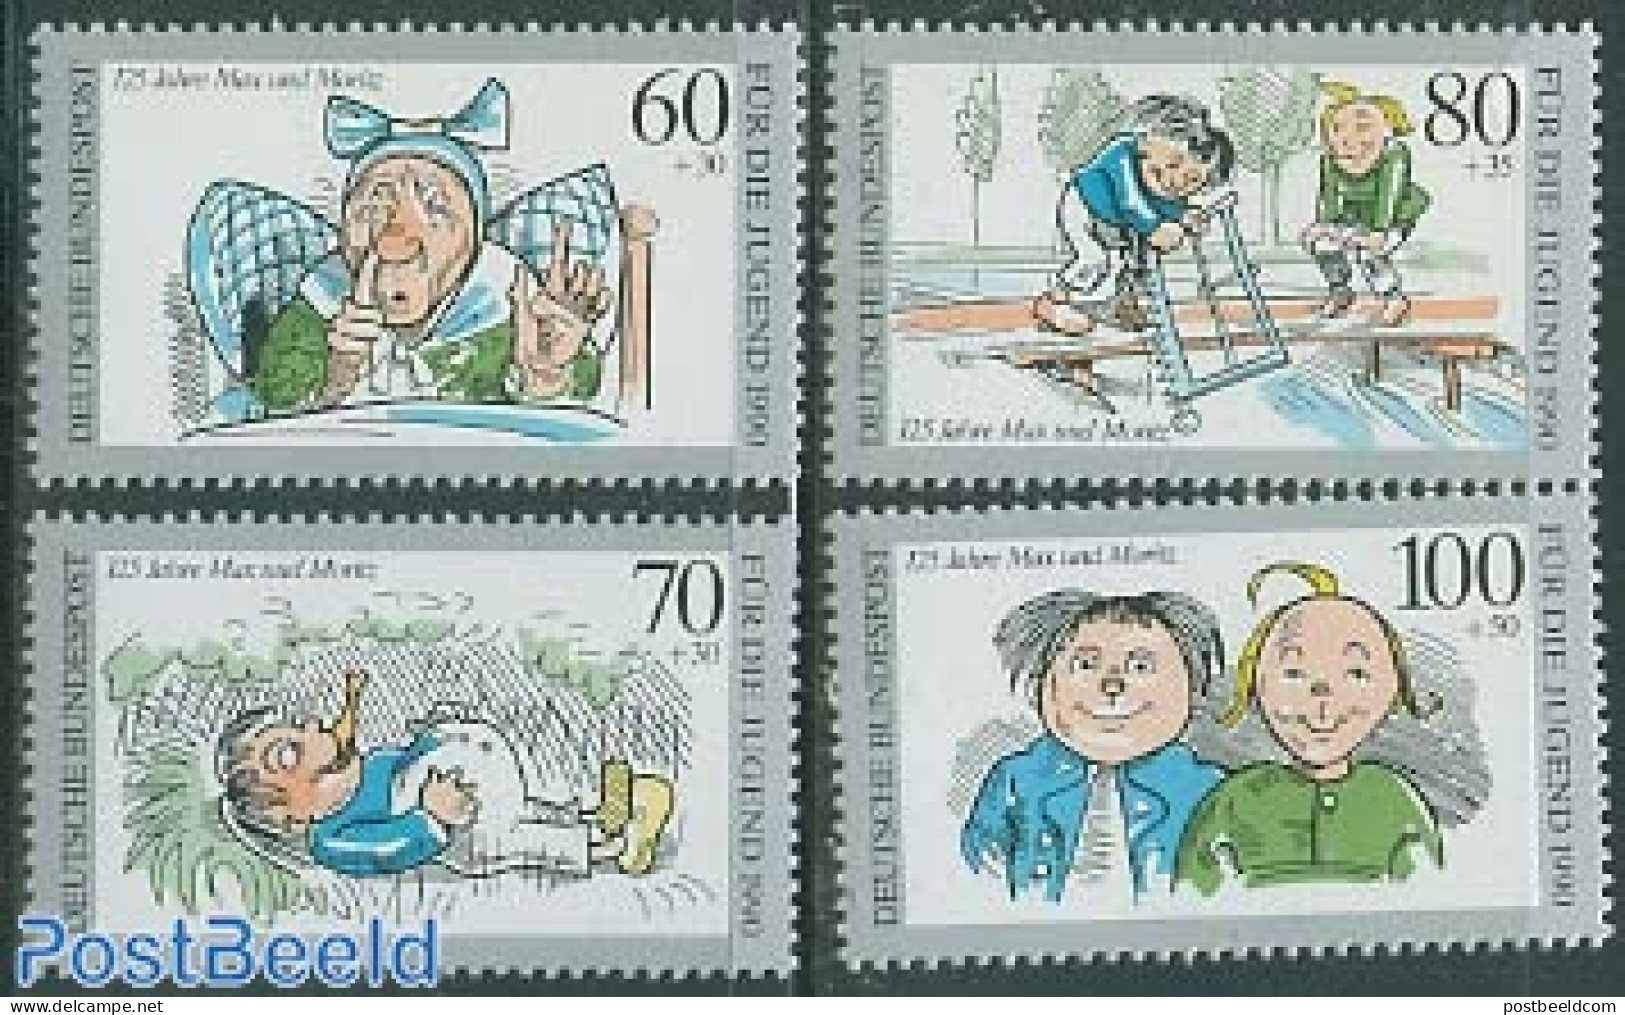 Germany, Federal Republic 1990 Youth, Max & Moritz 4v, Mint NH, Art - Books - Children's Books Illustrations - Neufs